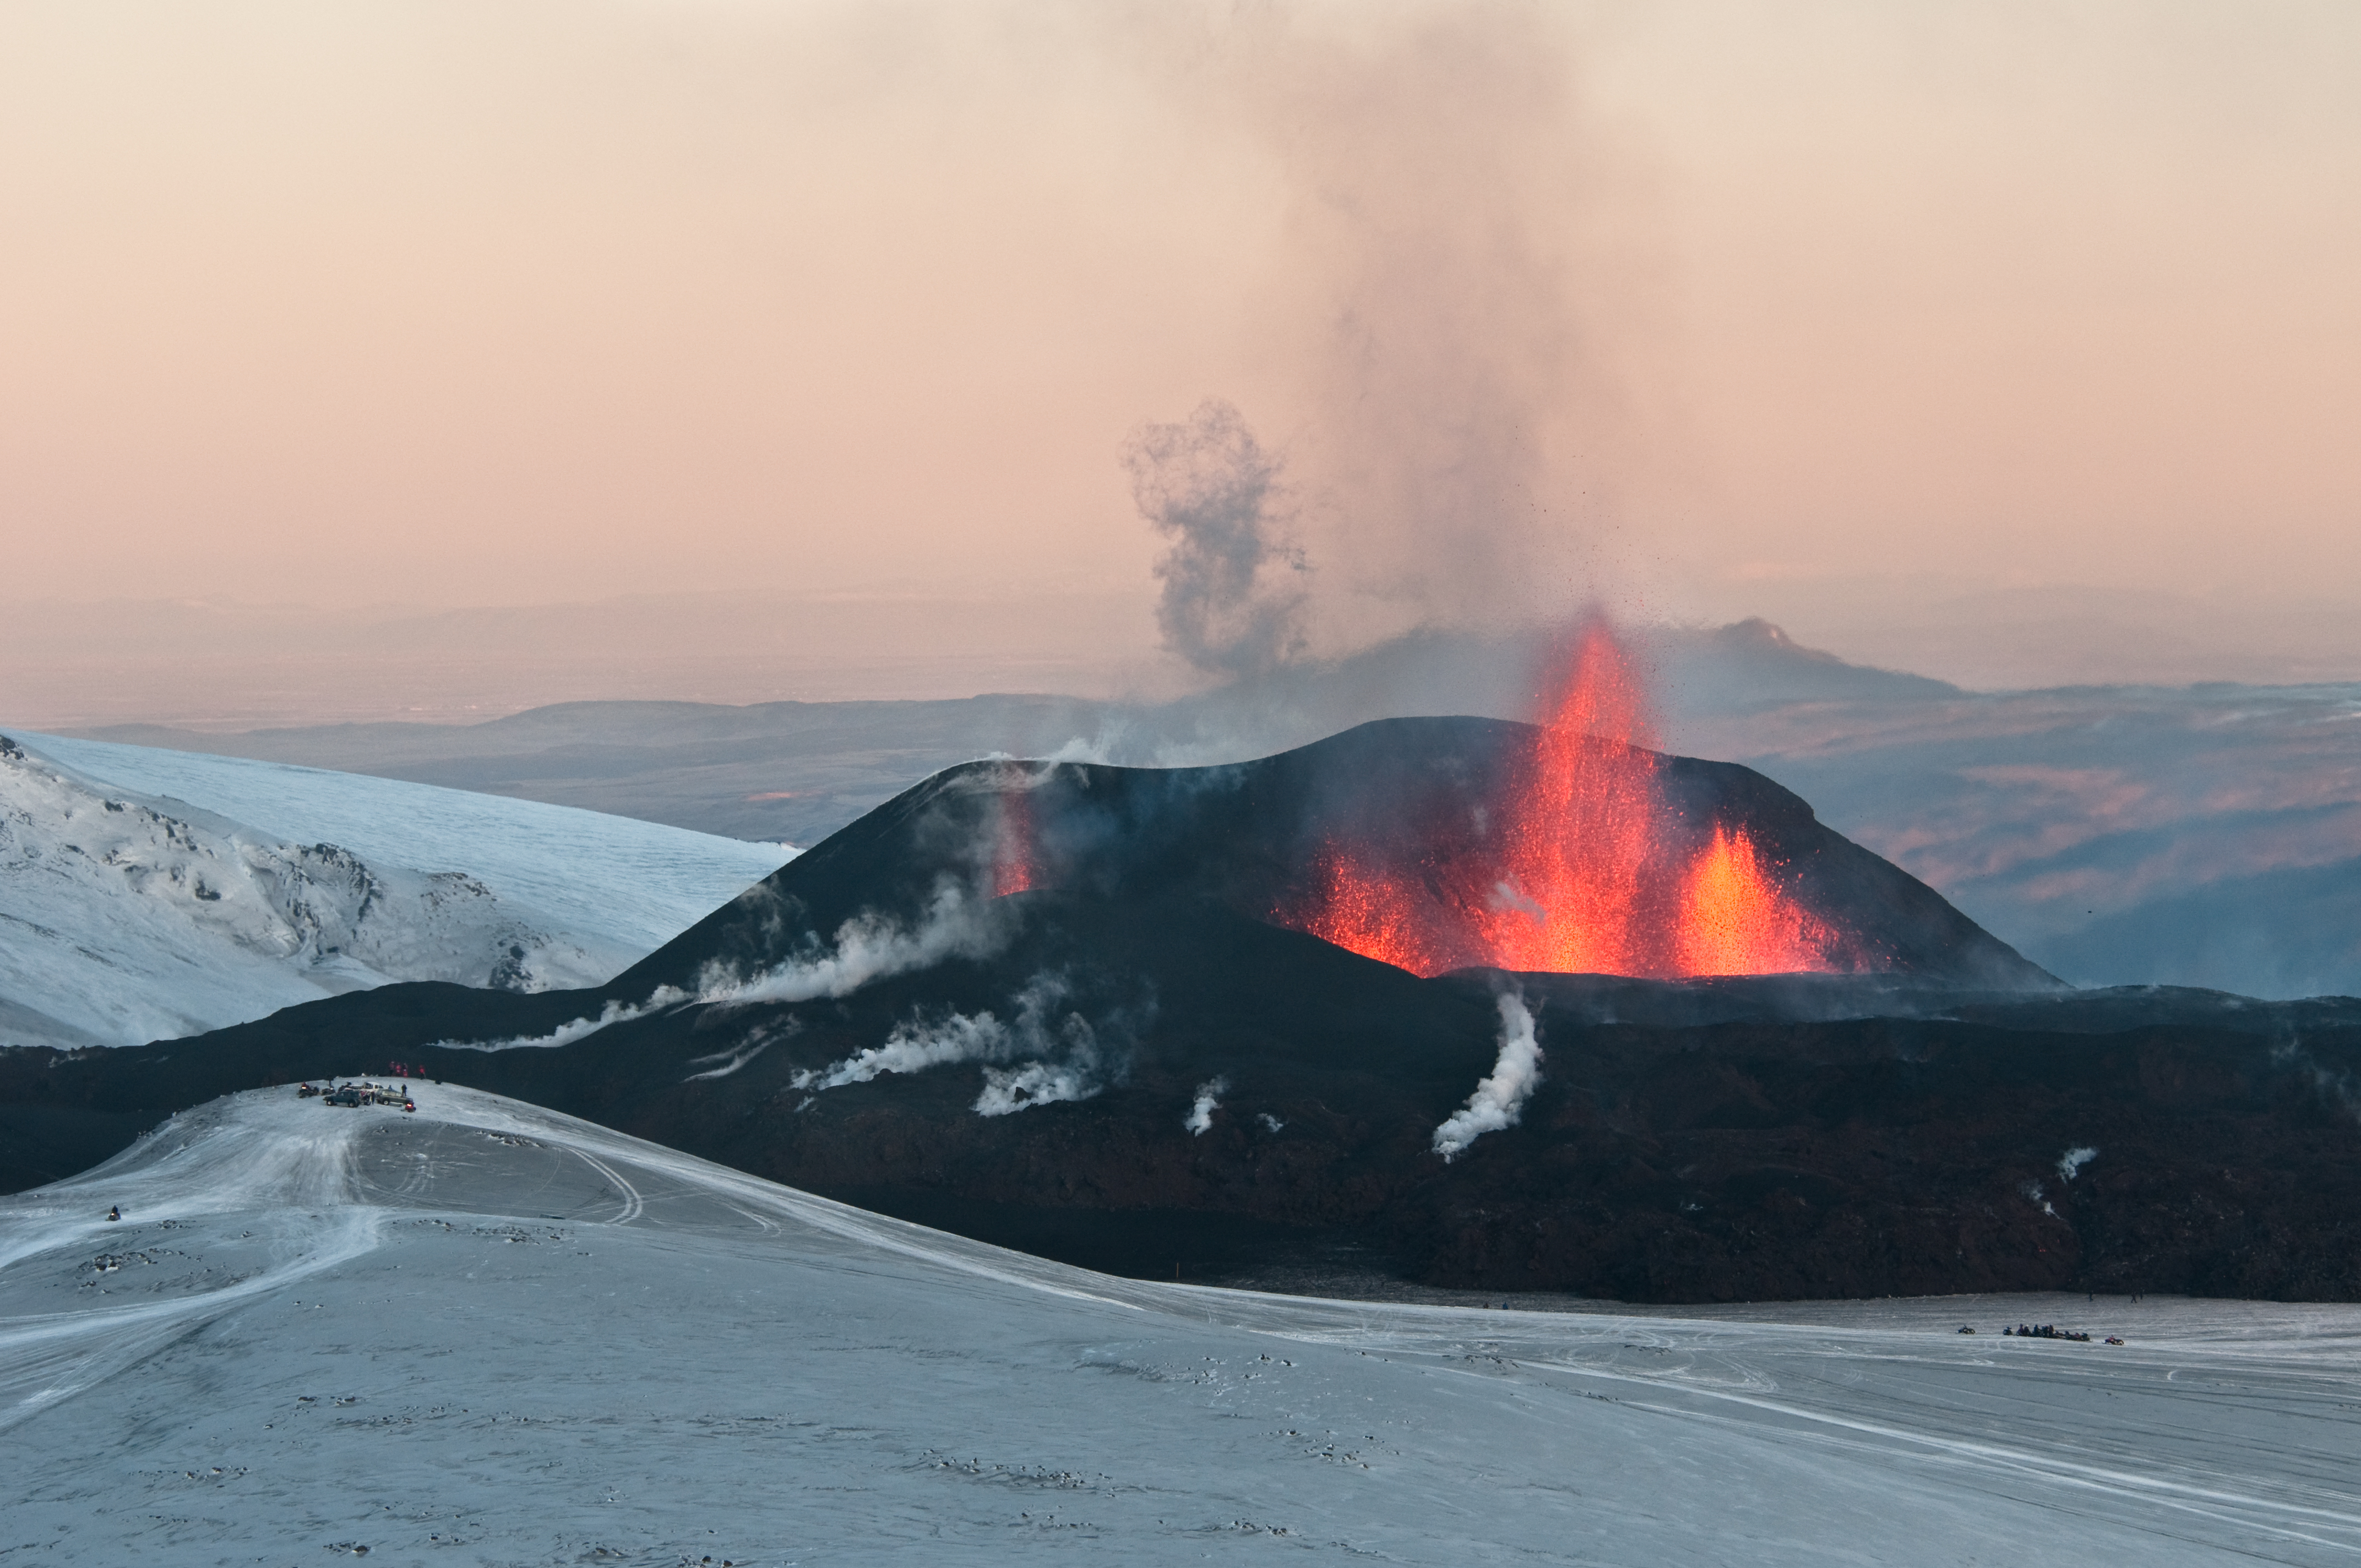 The first fissure that opened on Fimmvörðuháls, as seen from Austurgígar in 2010. Image credit: David Karnå/Wikimedia Commons